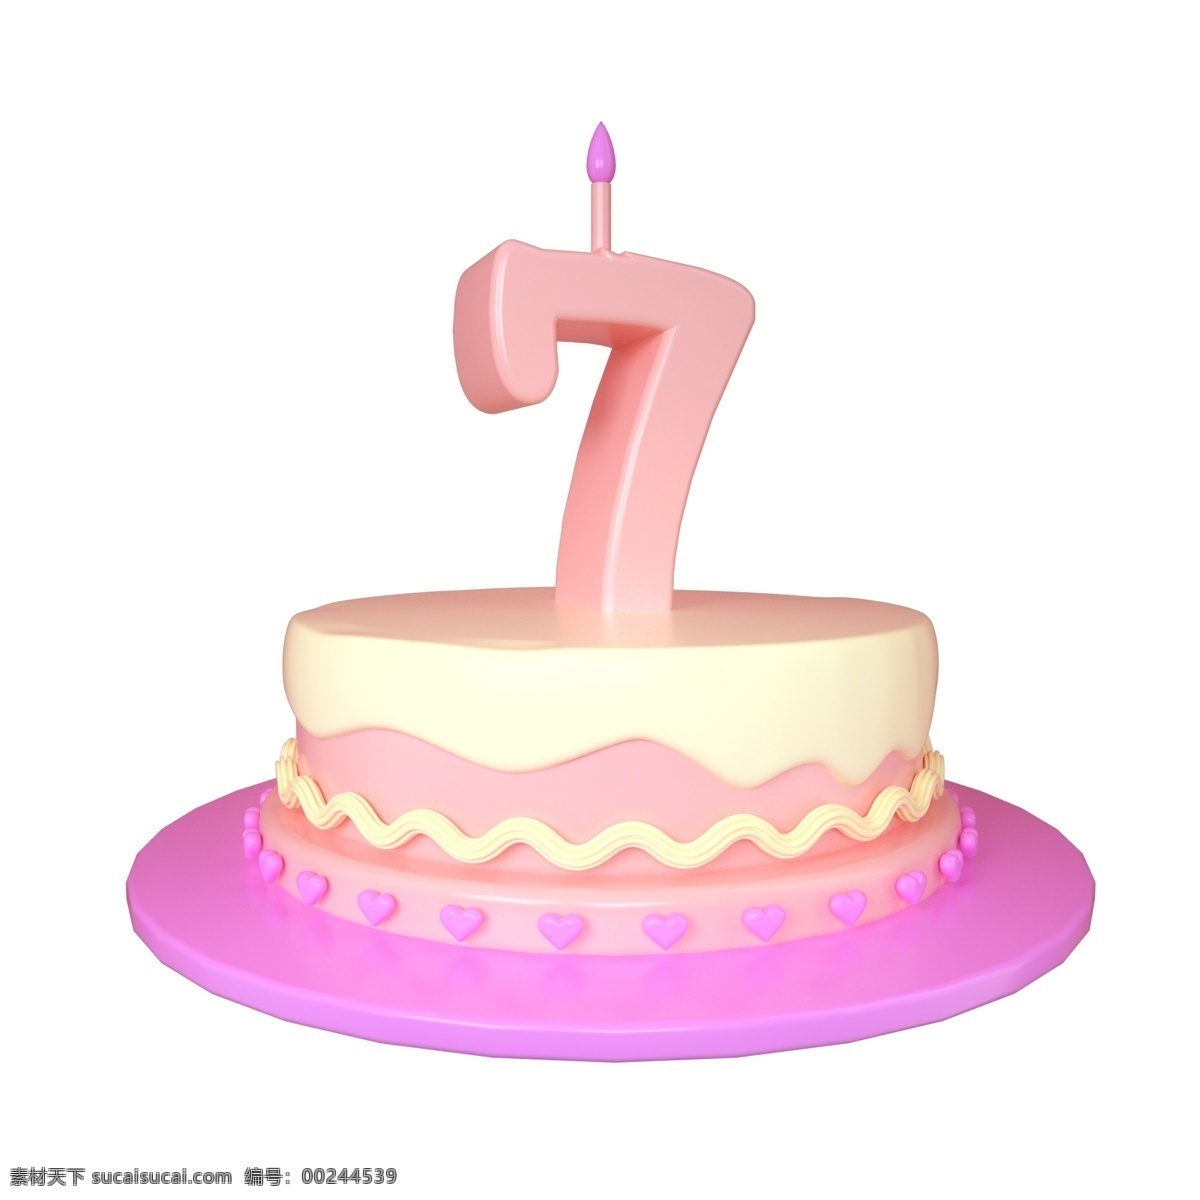 c4d 可爱 立体 周岁 生日蛋糕 装饰 3d 7周岁 粉色 奶黄色 紫色 爱心 庆祝生日 蜡烛